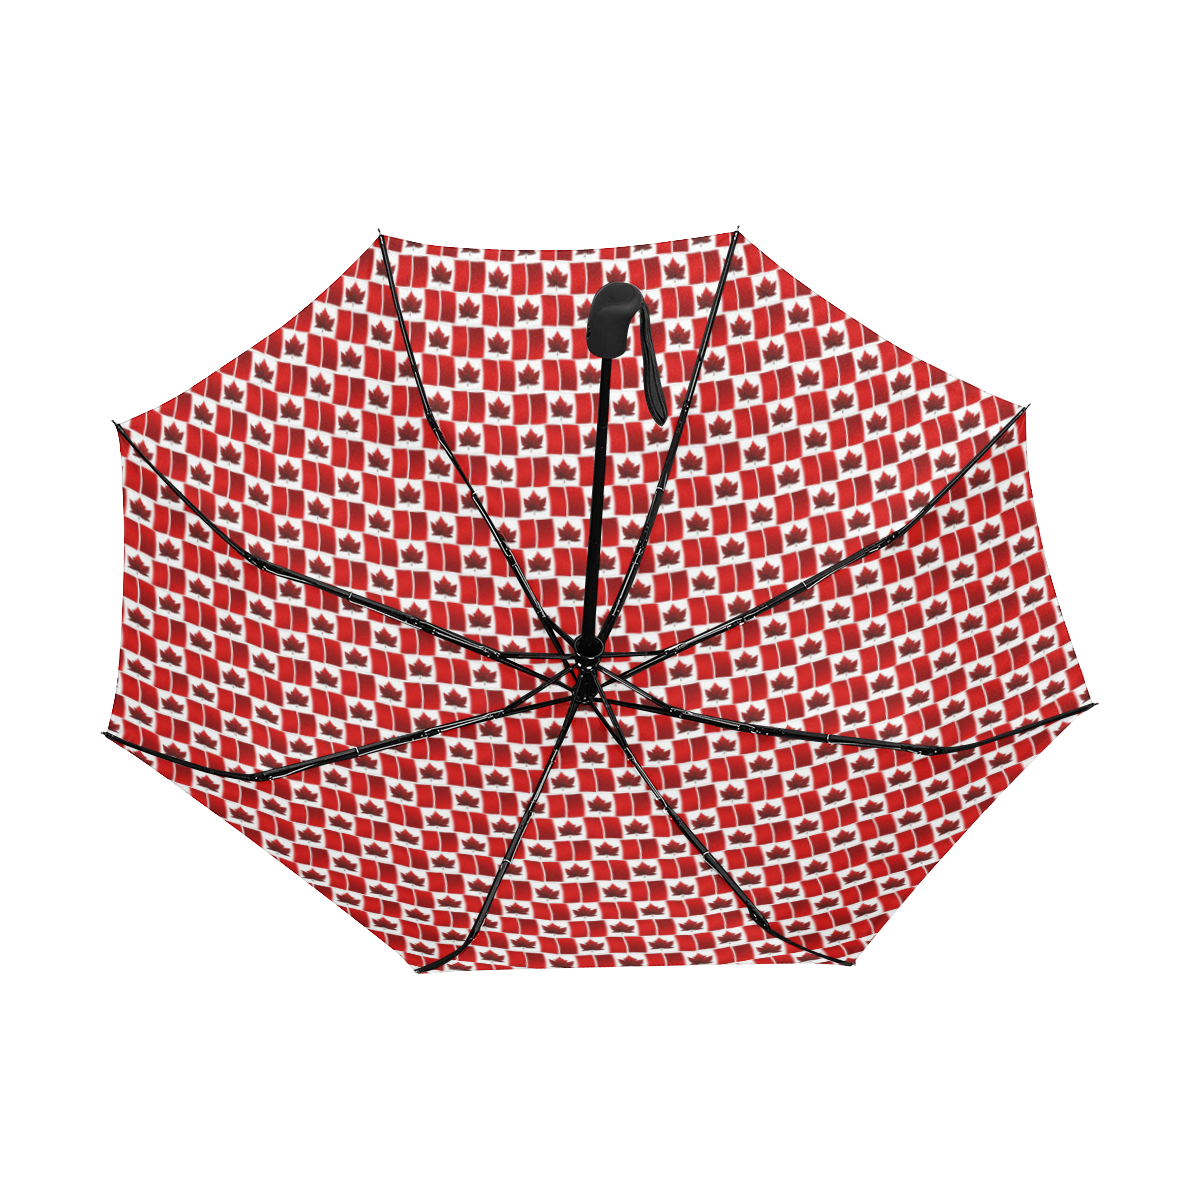 Canadian Flag Umbrellas Anti-UV Auto-Foldable Umbrella (Underside Printing) (U06)